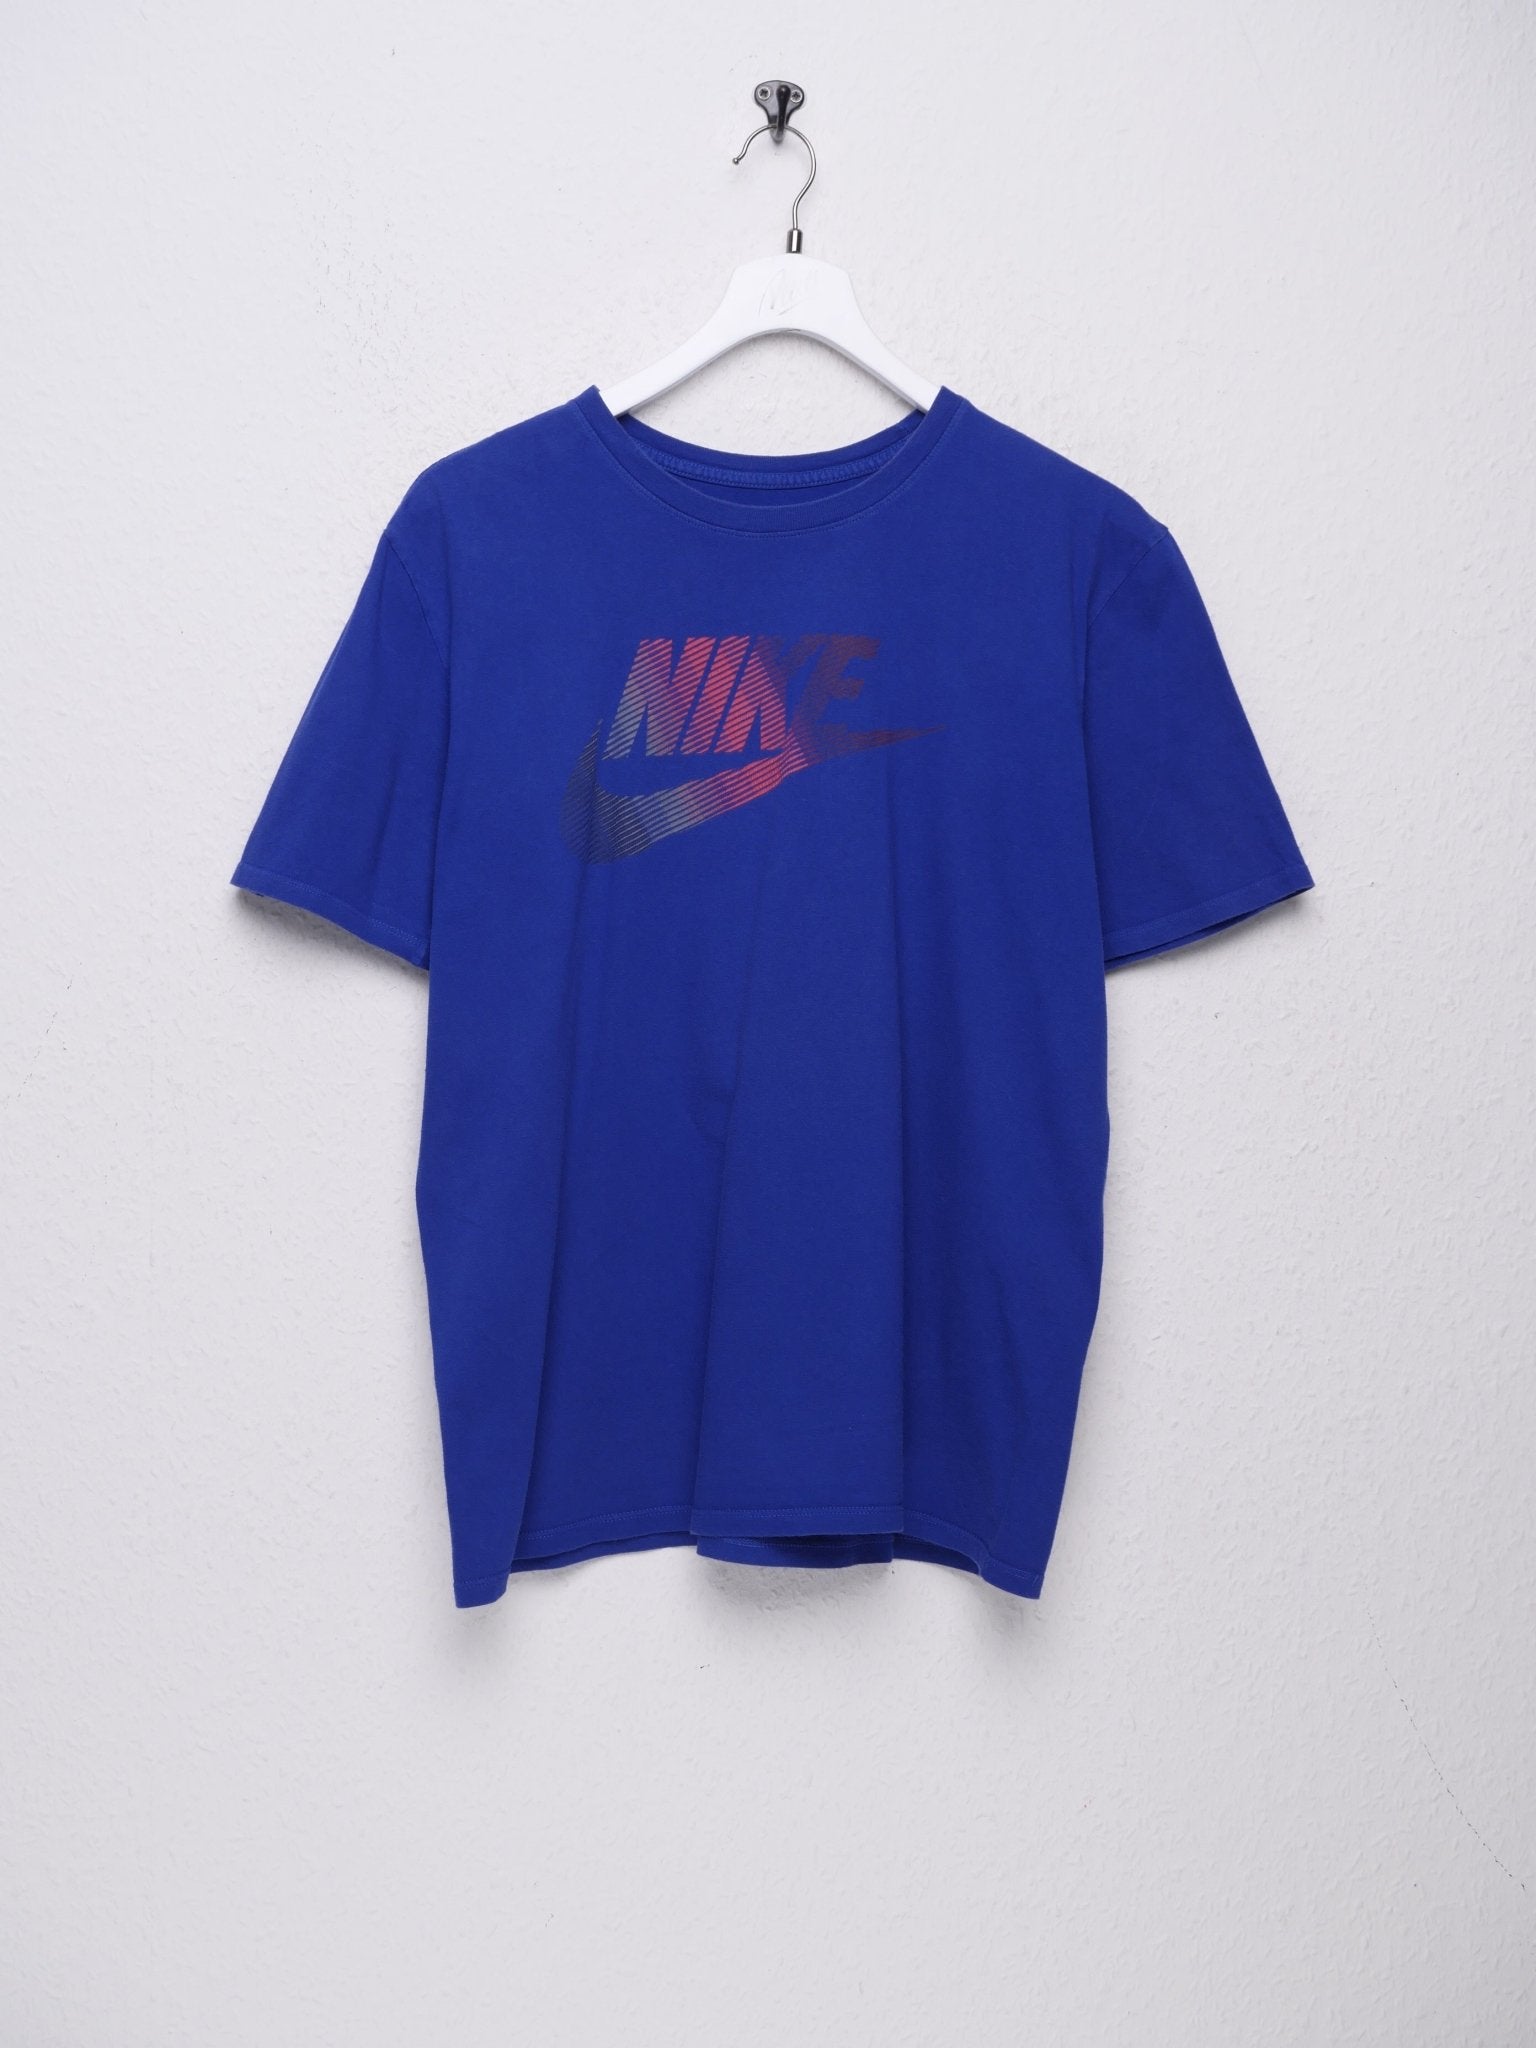 Nike printed Logo washed blue Shirt - Peeces